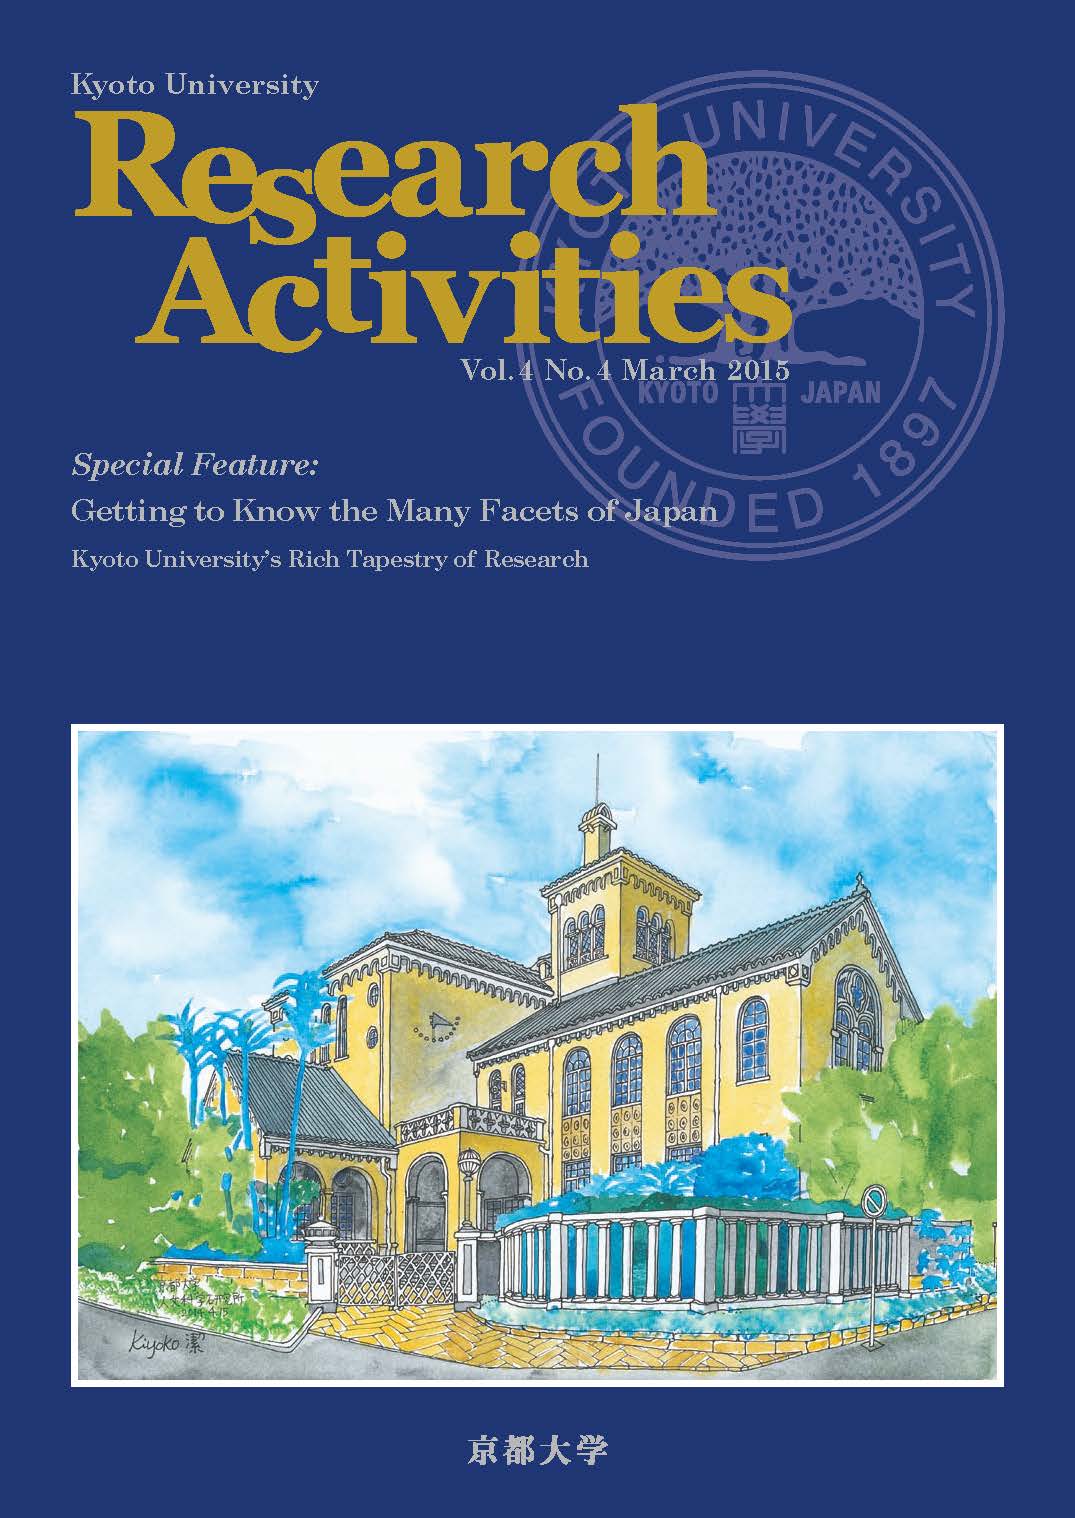 Kyoto University Research Activities Vol.4 No.4 March 2015